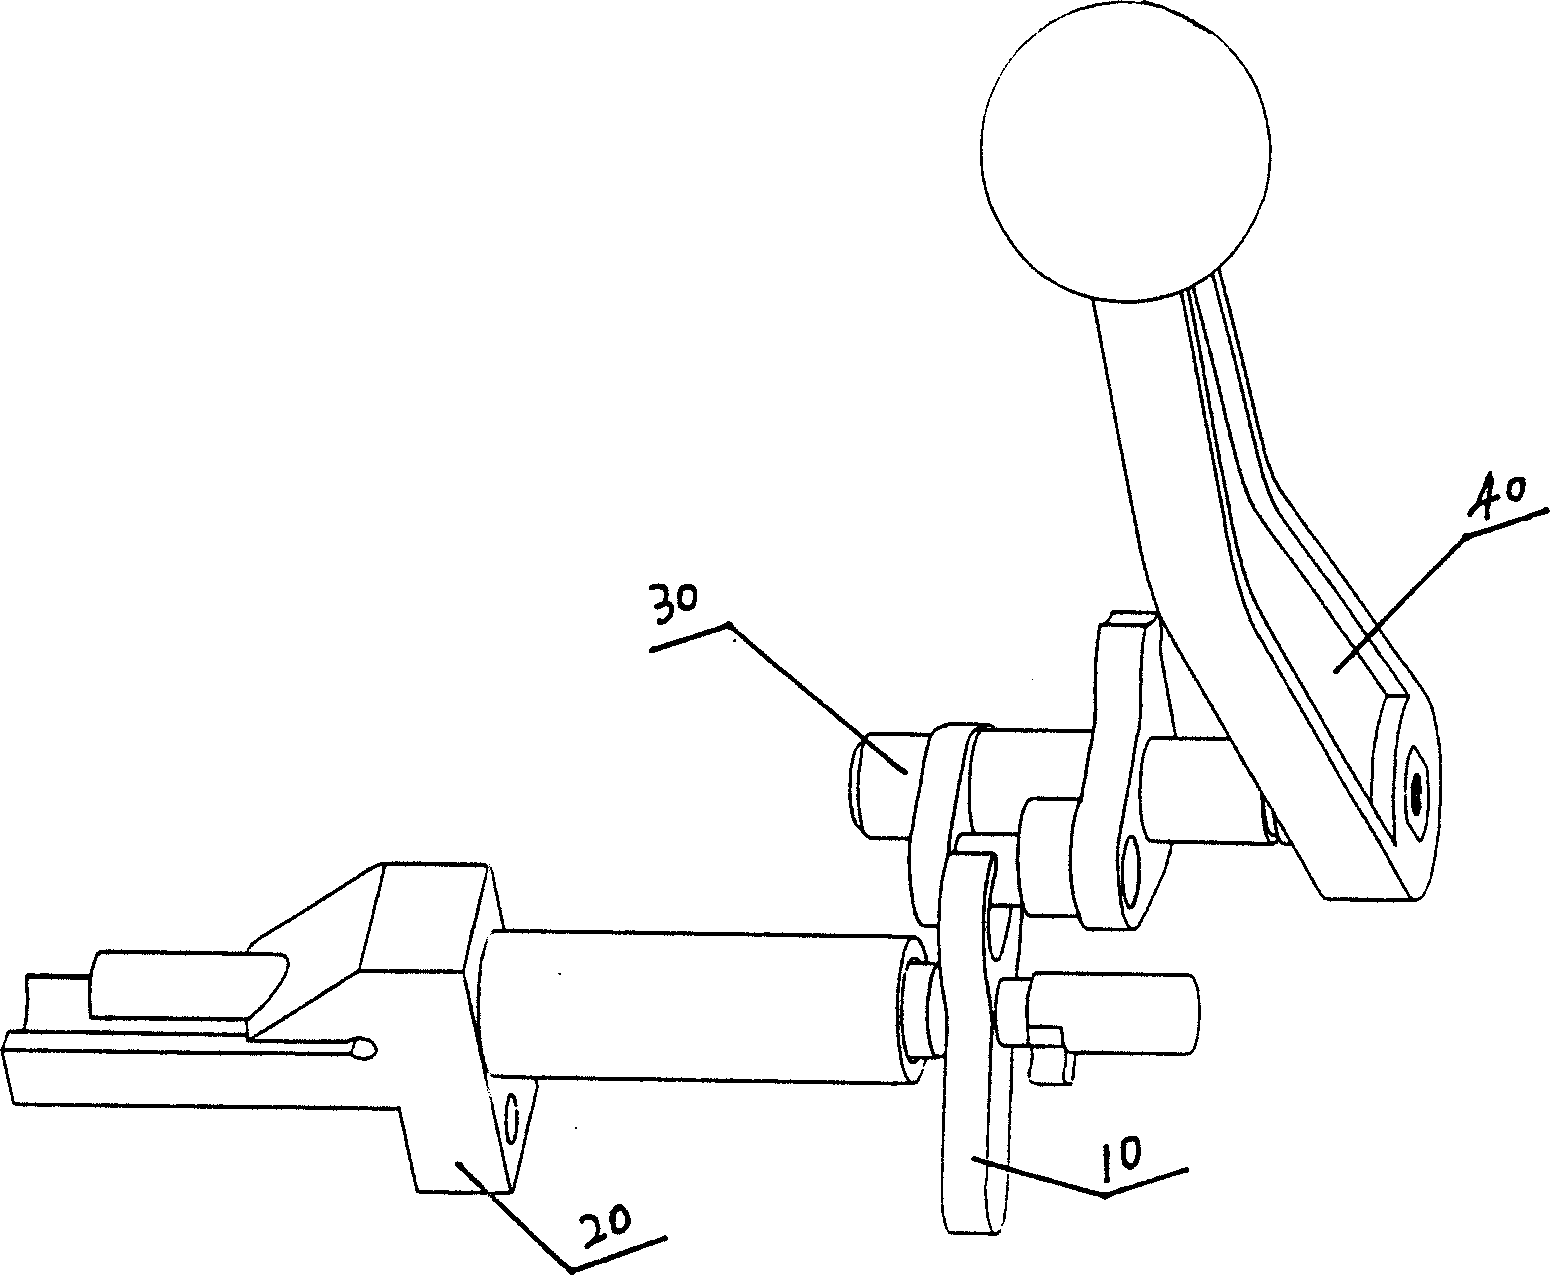 Process of making cutting mechanism of baler